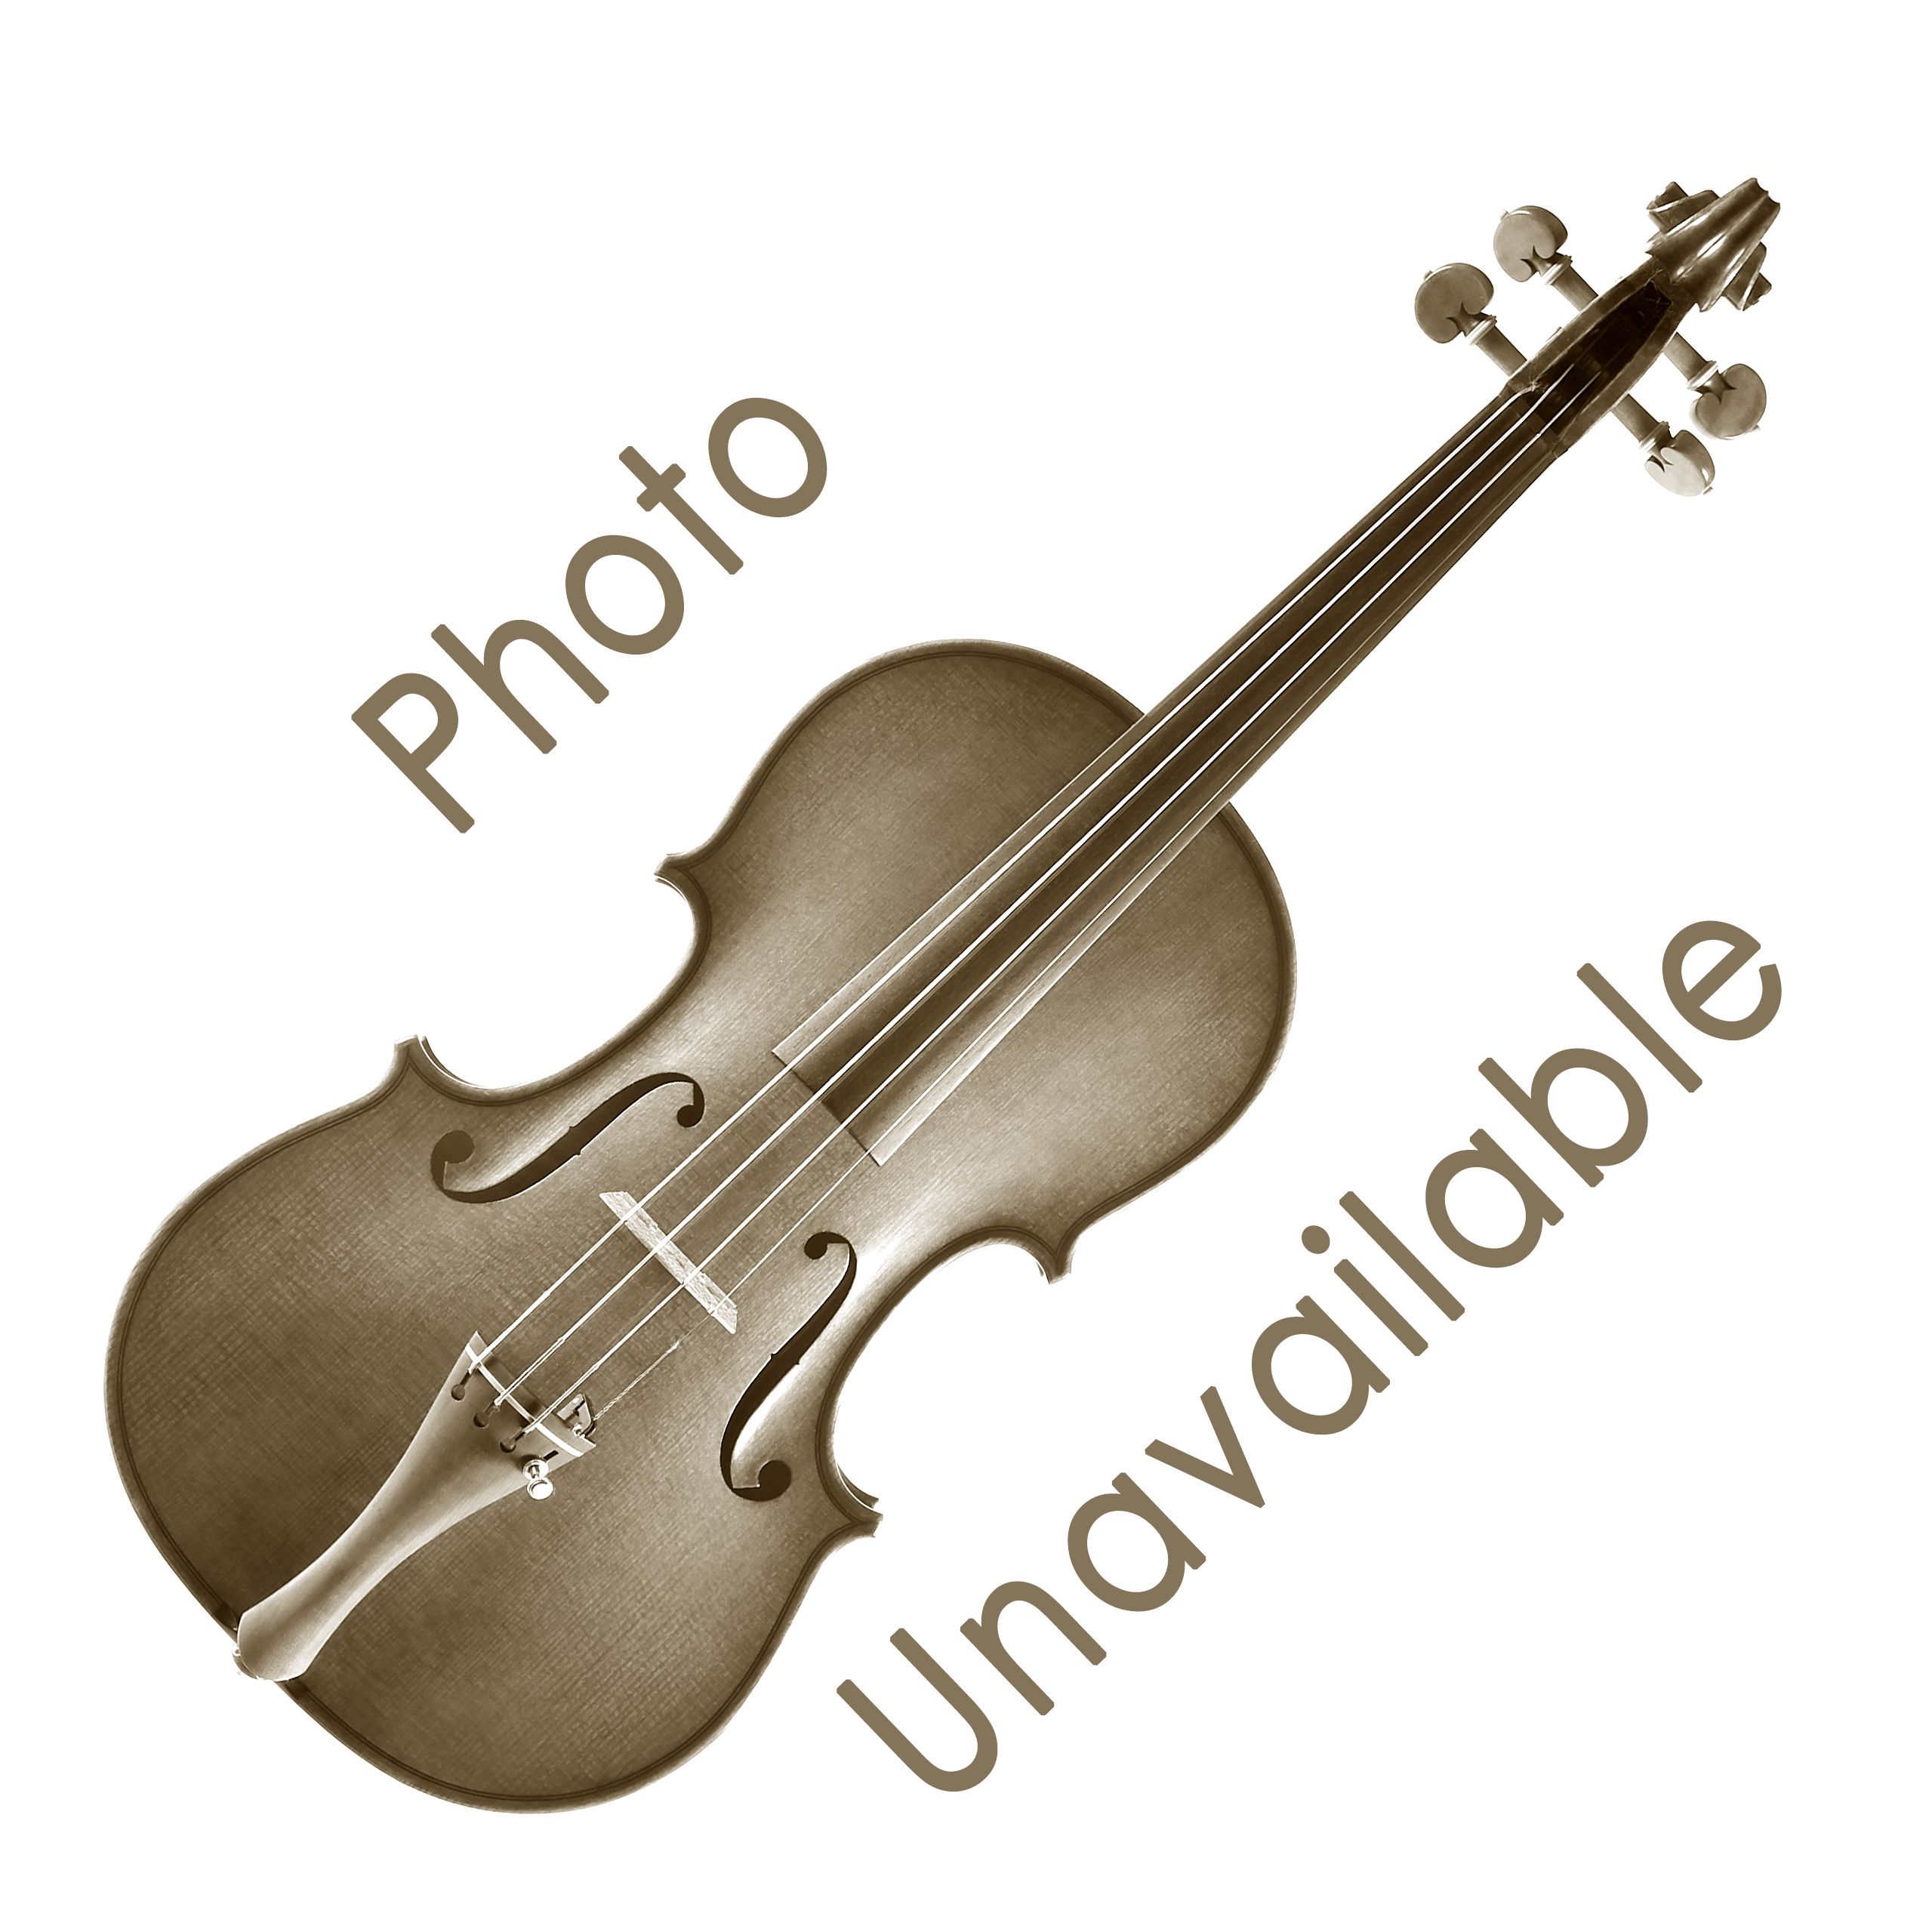 Fiddleheads Sun VN-100 Student Violin - 1/16 size